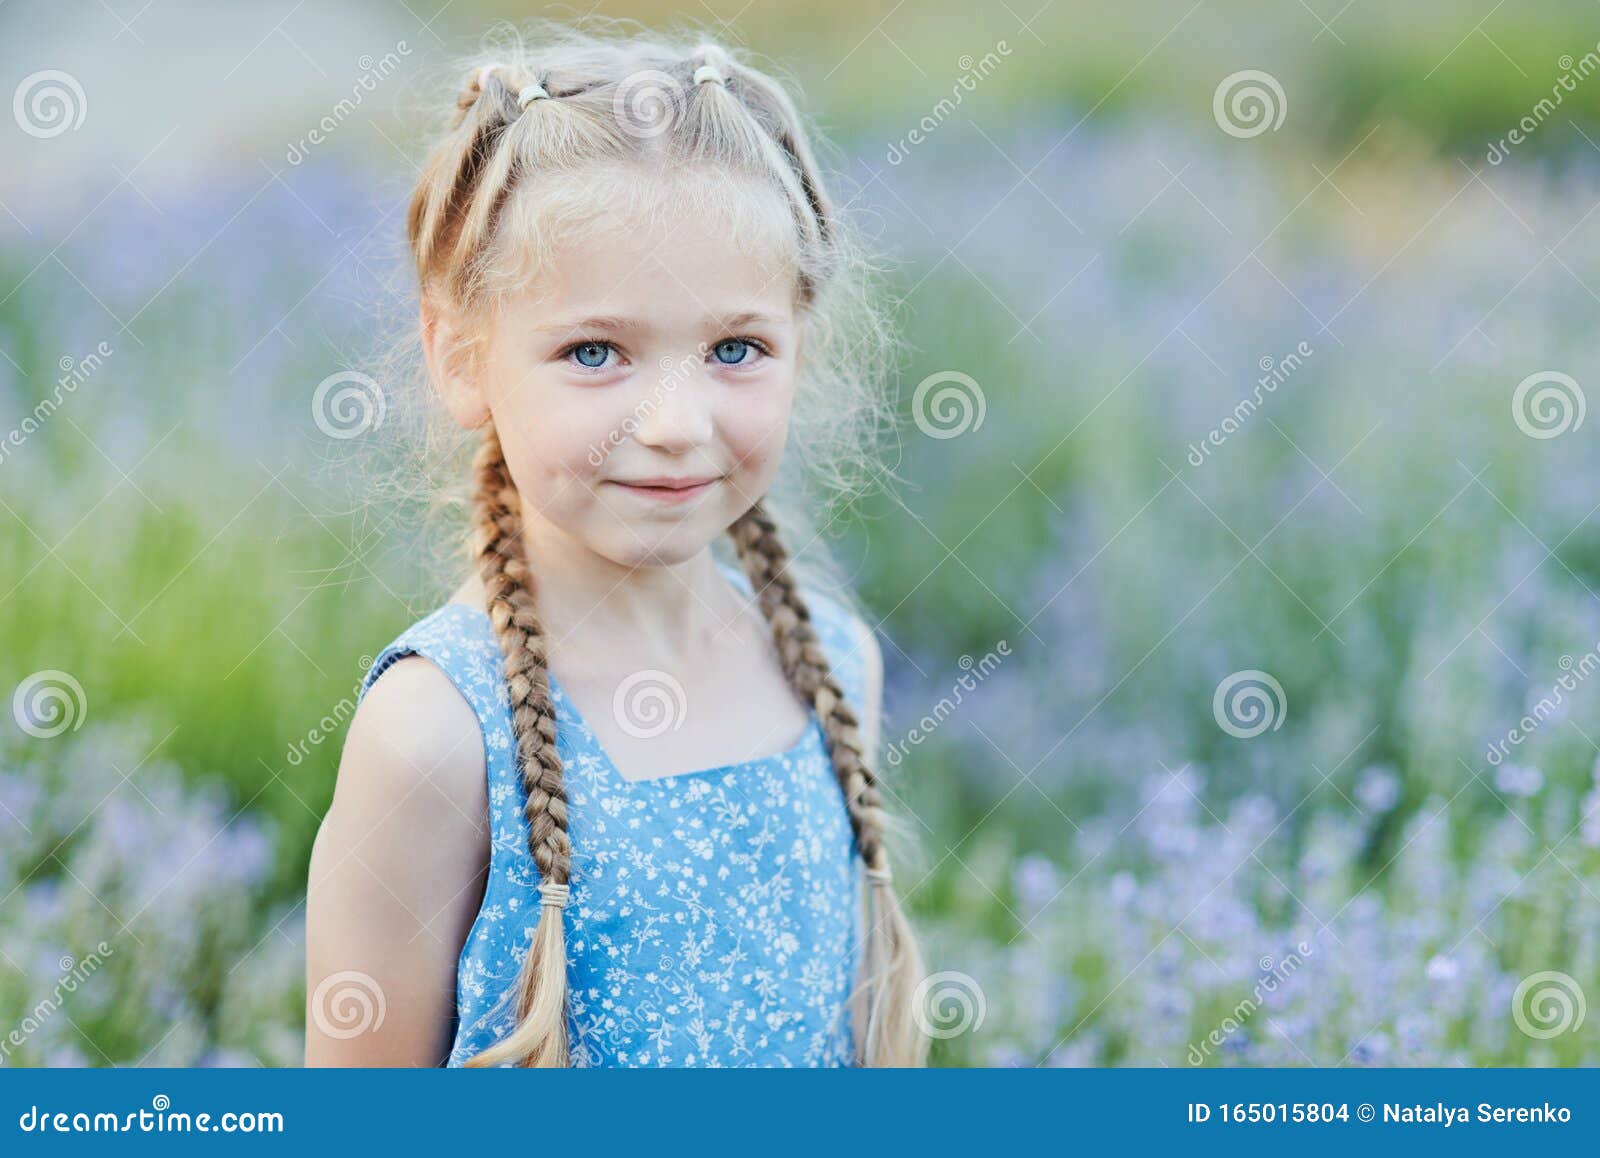 little girl in lavender field. kids fantasy. smiling girl sniffing flowers in summer purple lavender field